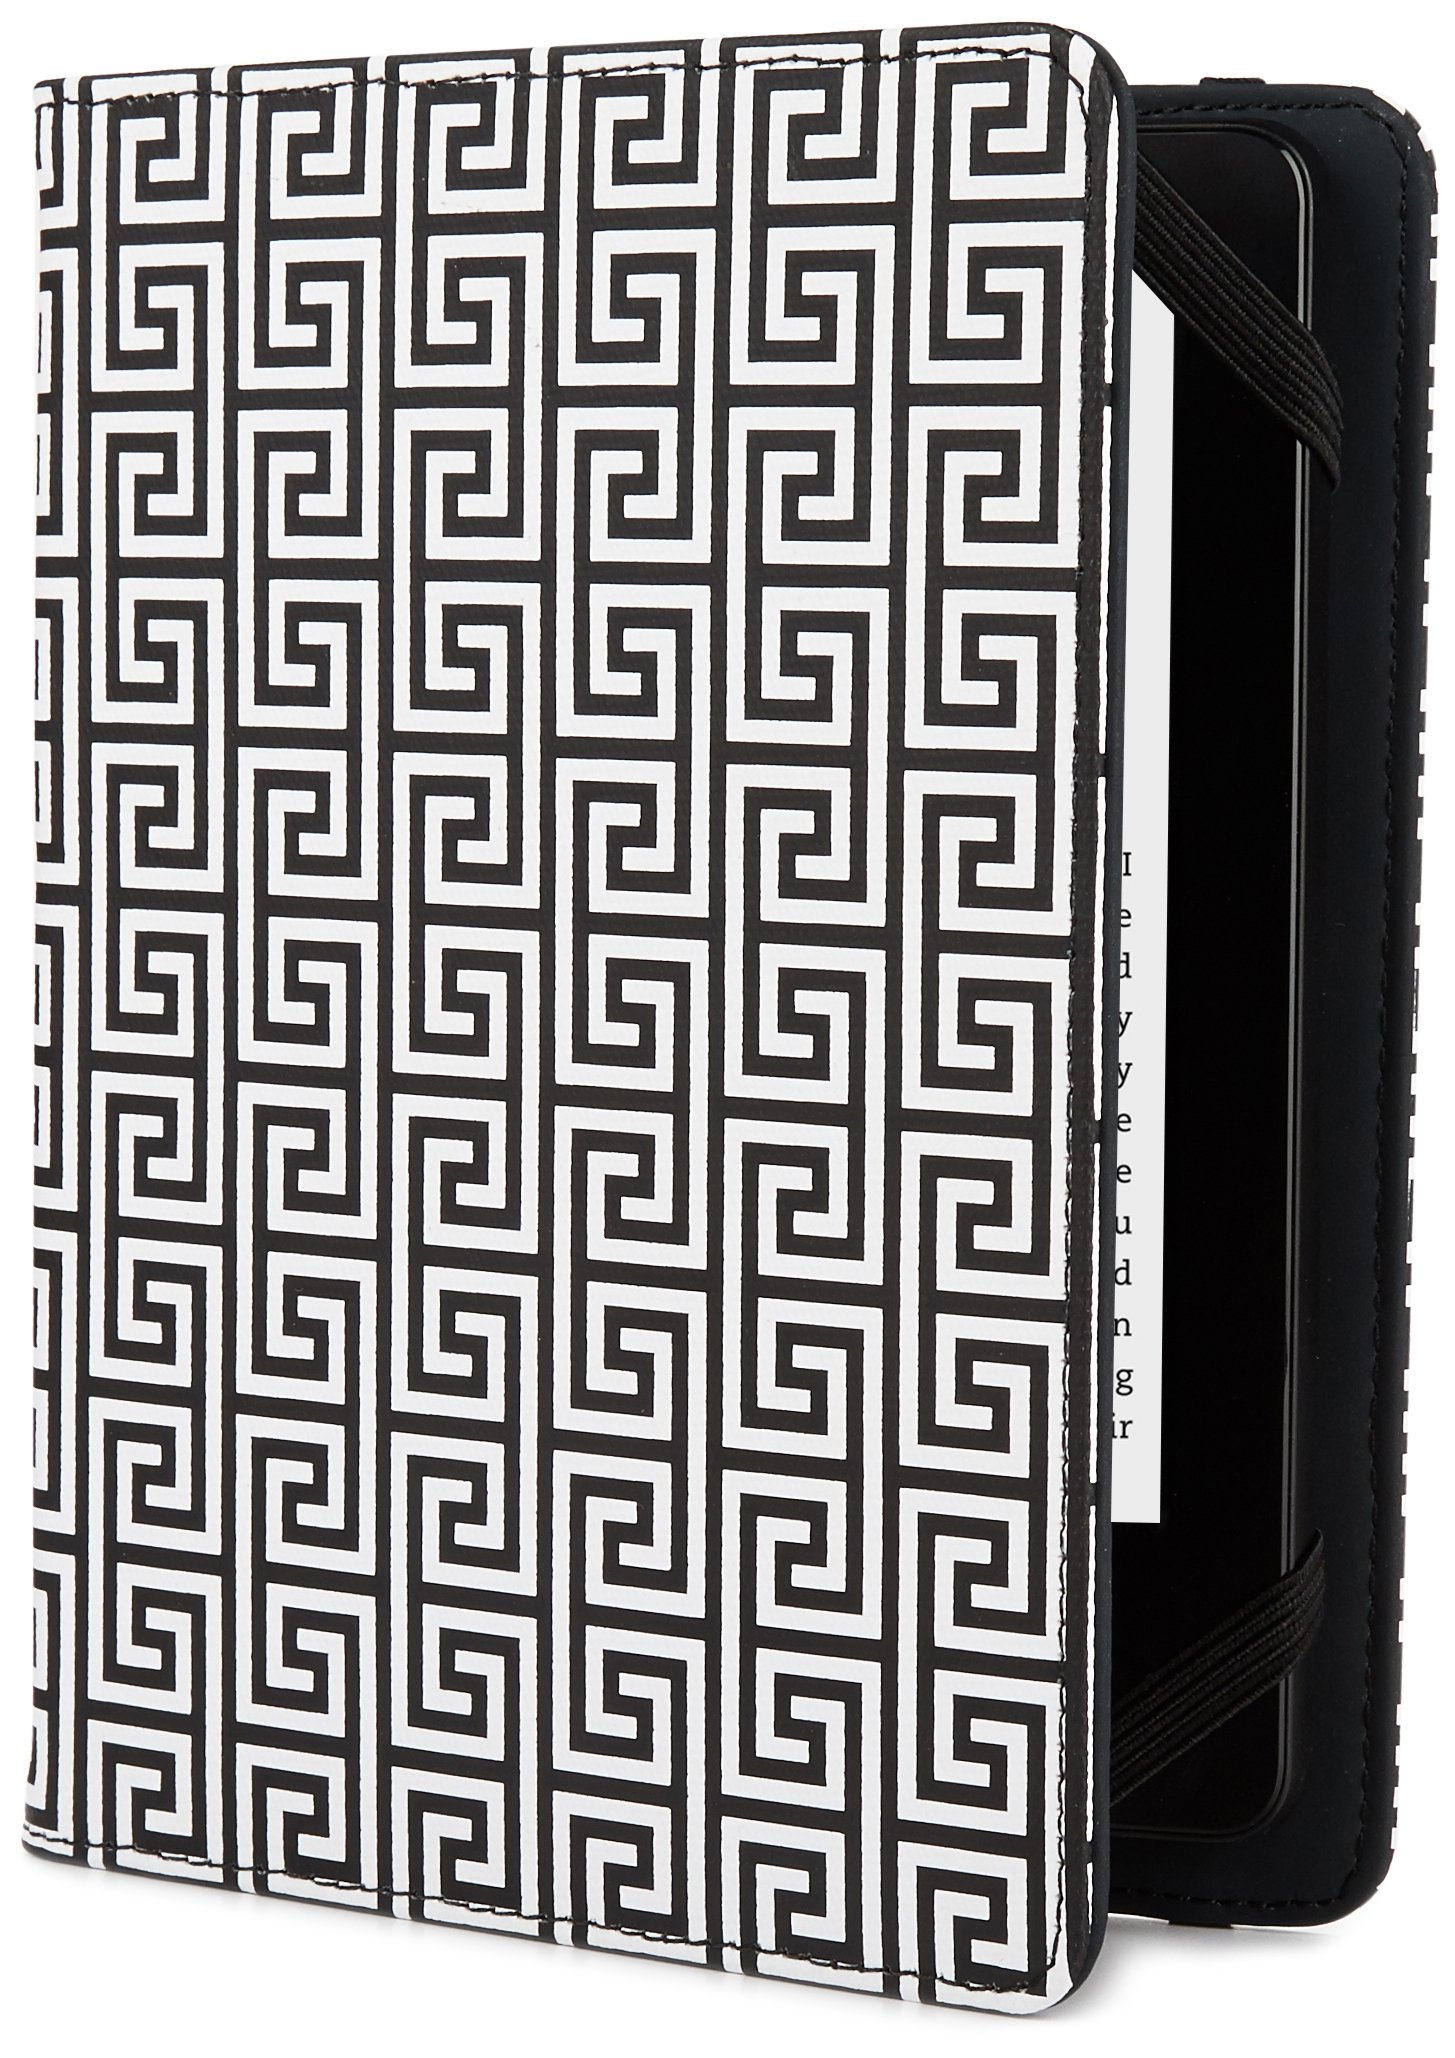 Book Cover Jonathan Adler Greek Key Cover - Black/White (Fits Kindle Paperwhite, Kindle & Kindle Touch) Black Key